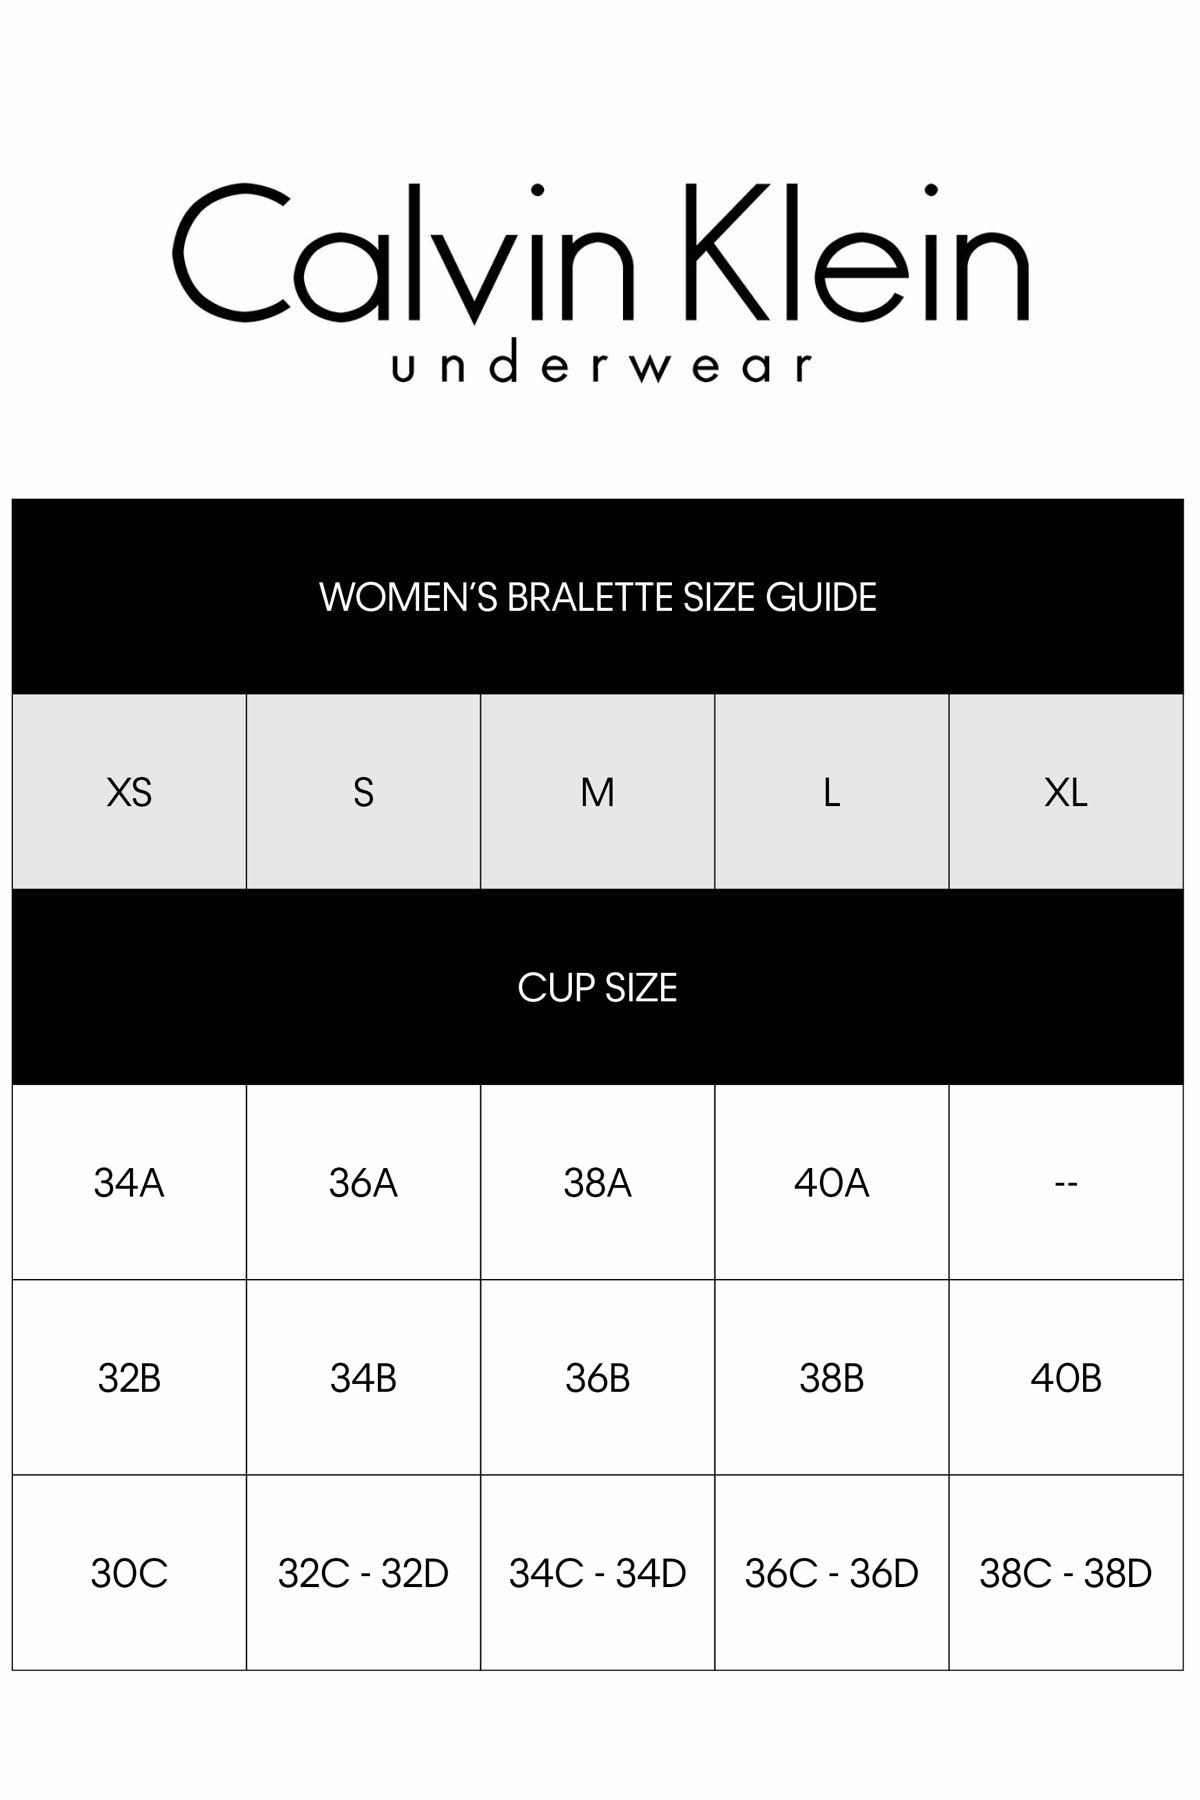 Calvin Klein Black Unlined Logo-Band Modal Blend Bandeau Bralette